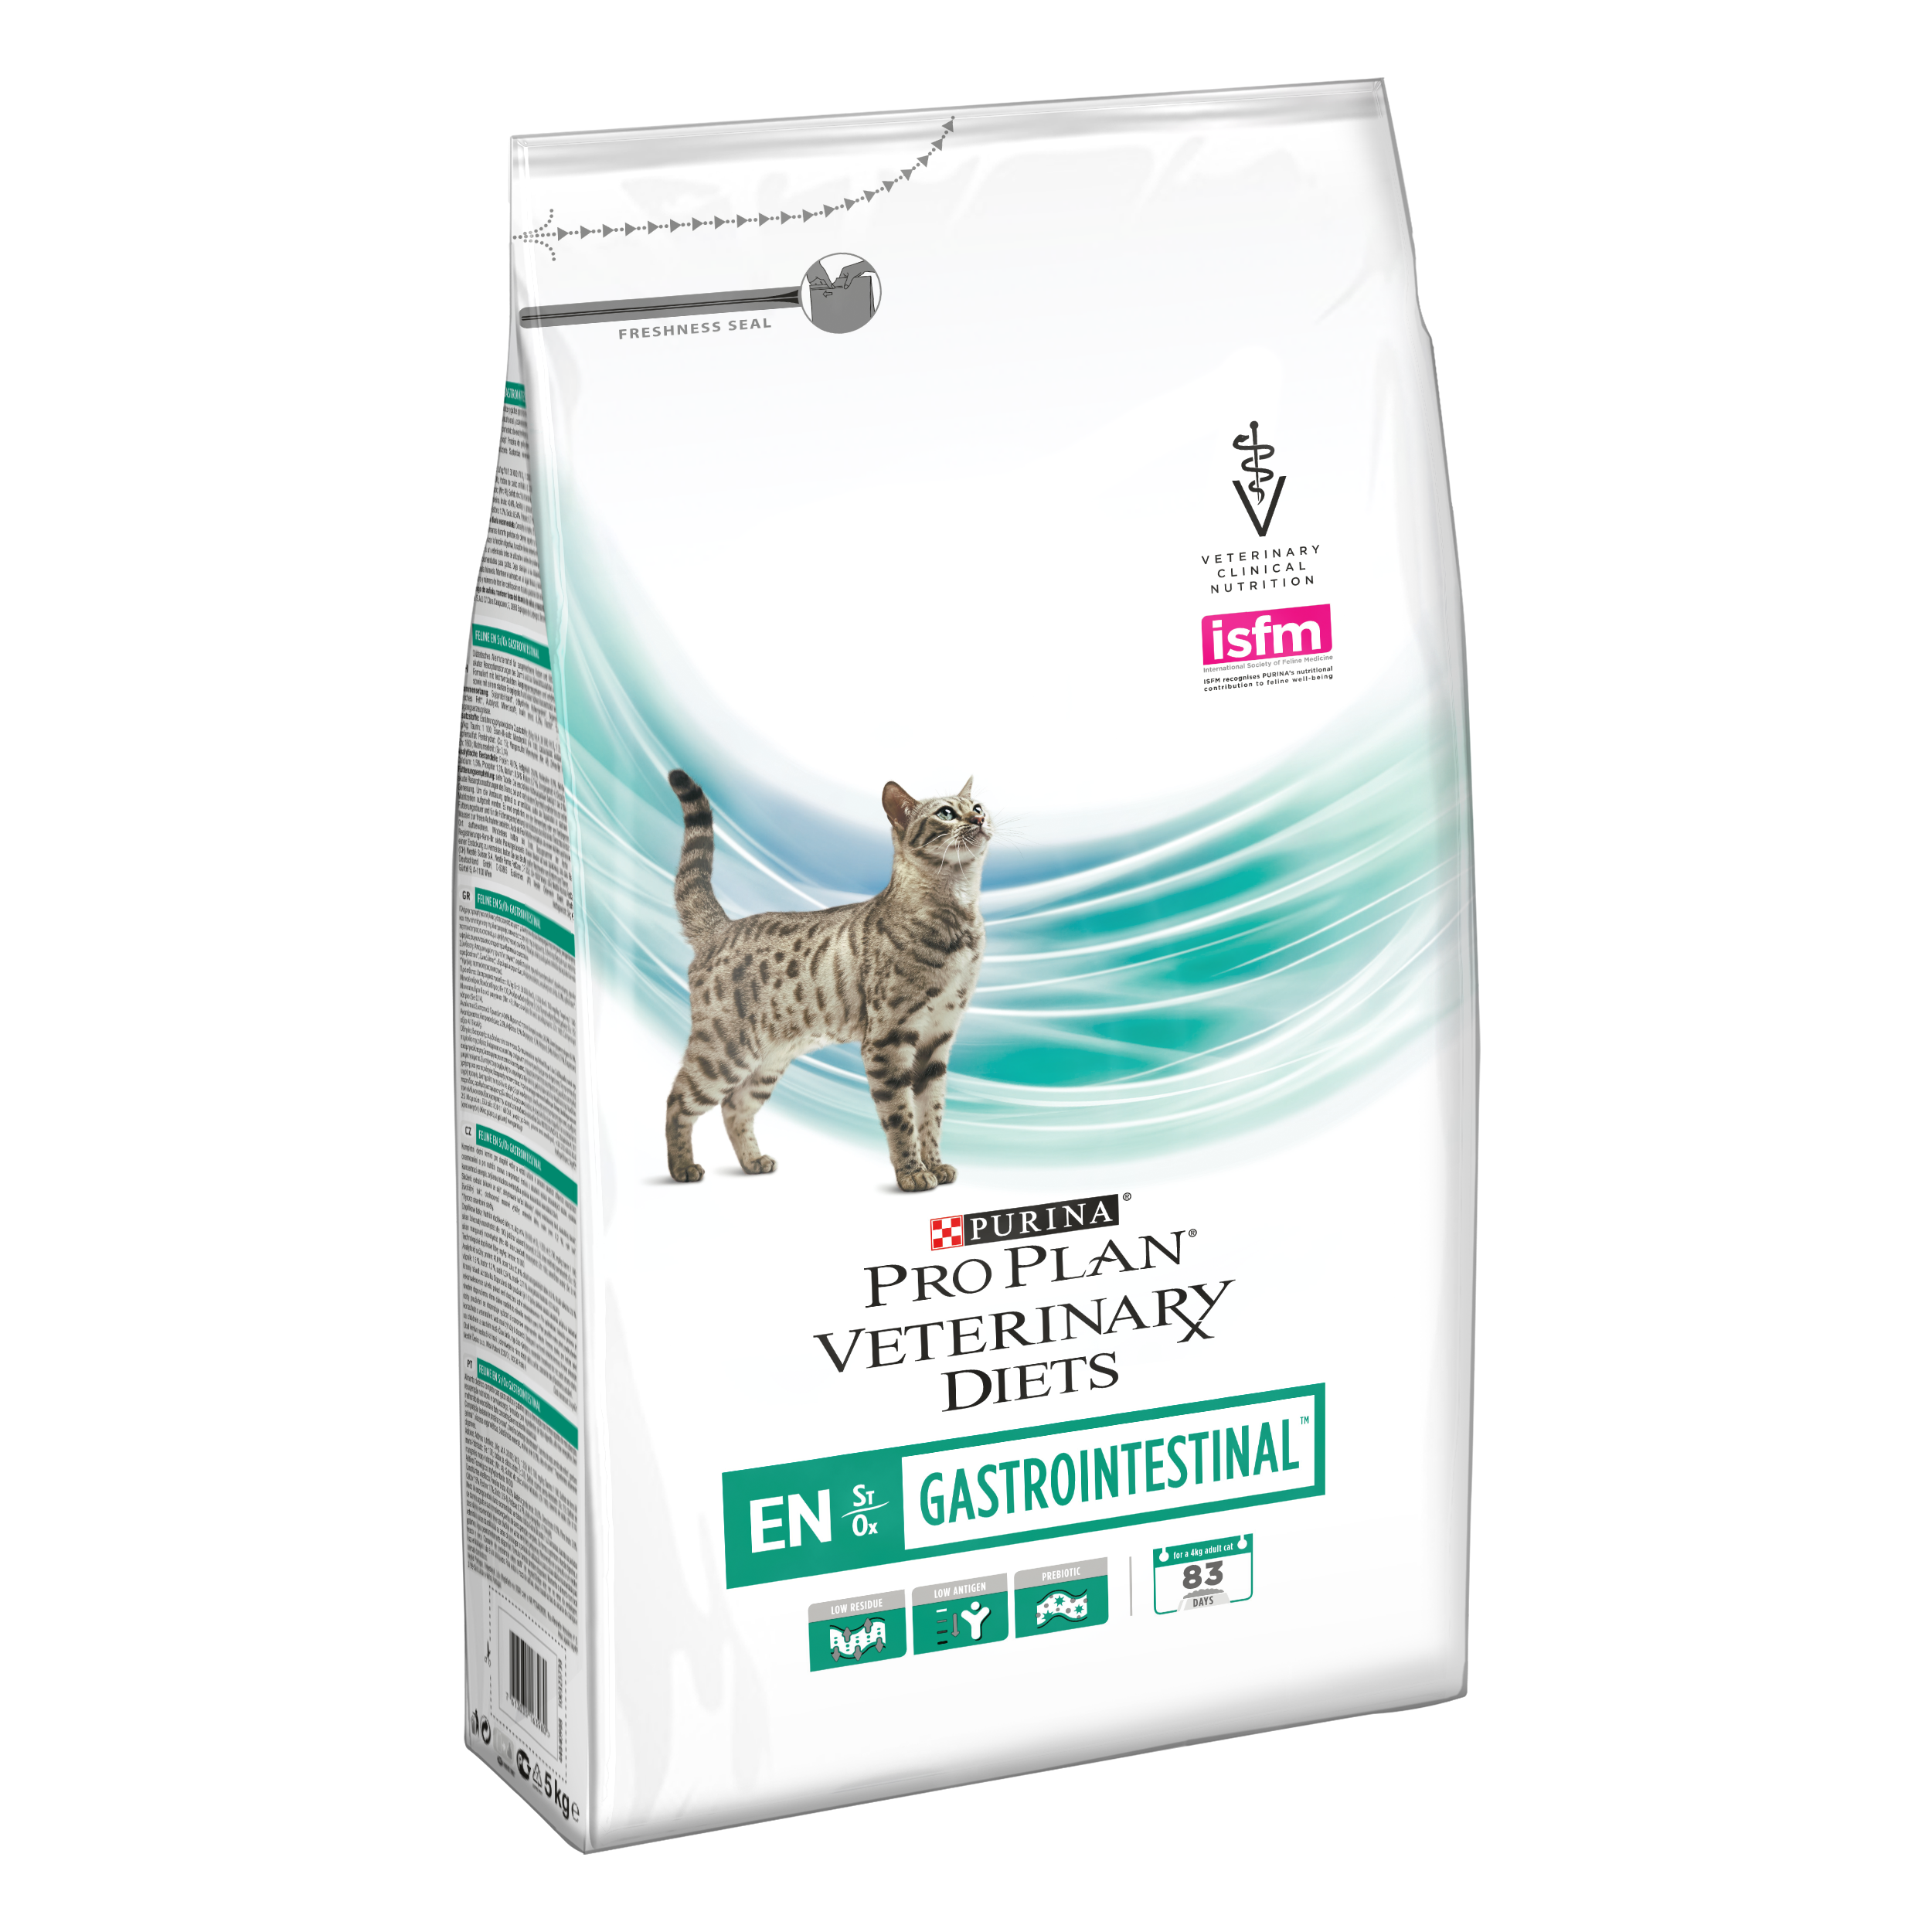 Purina Veterinary Diets Feline EN, Gastrointestinal, 5 Kg